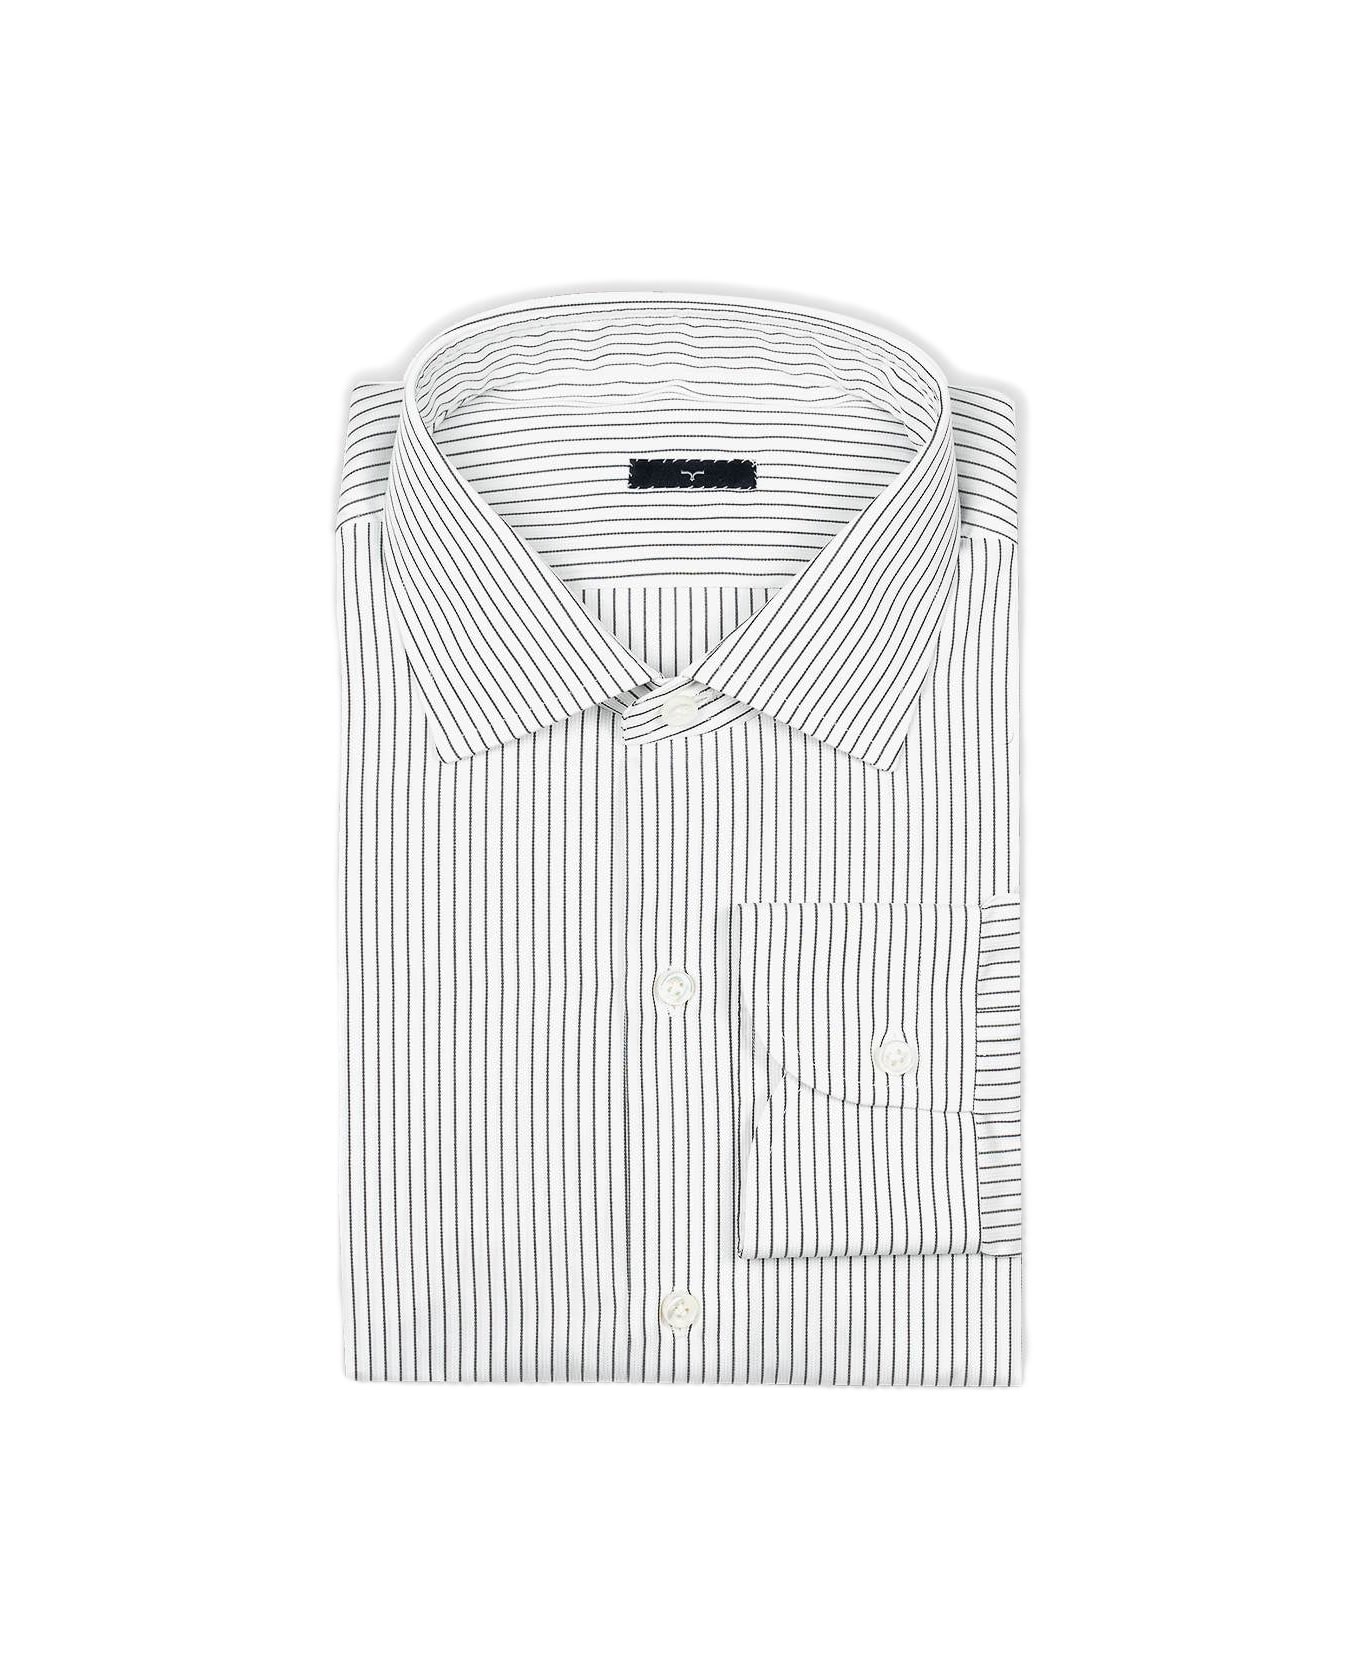 Larusmiani Handmade Shirt 'mayfair Executive' Shirt - Black/White